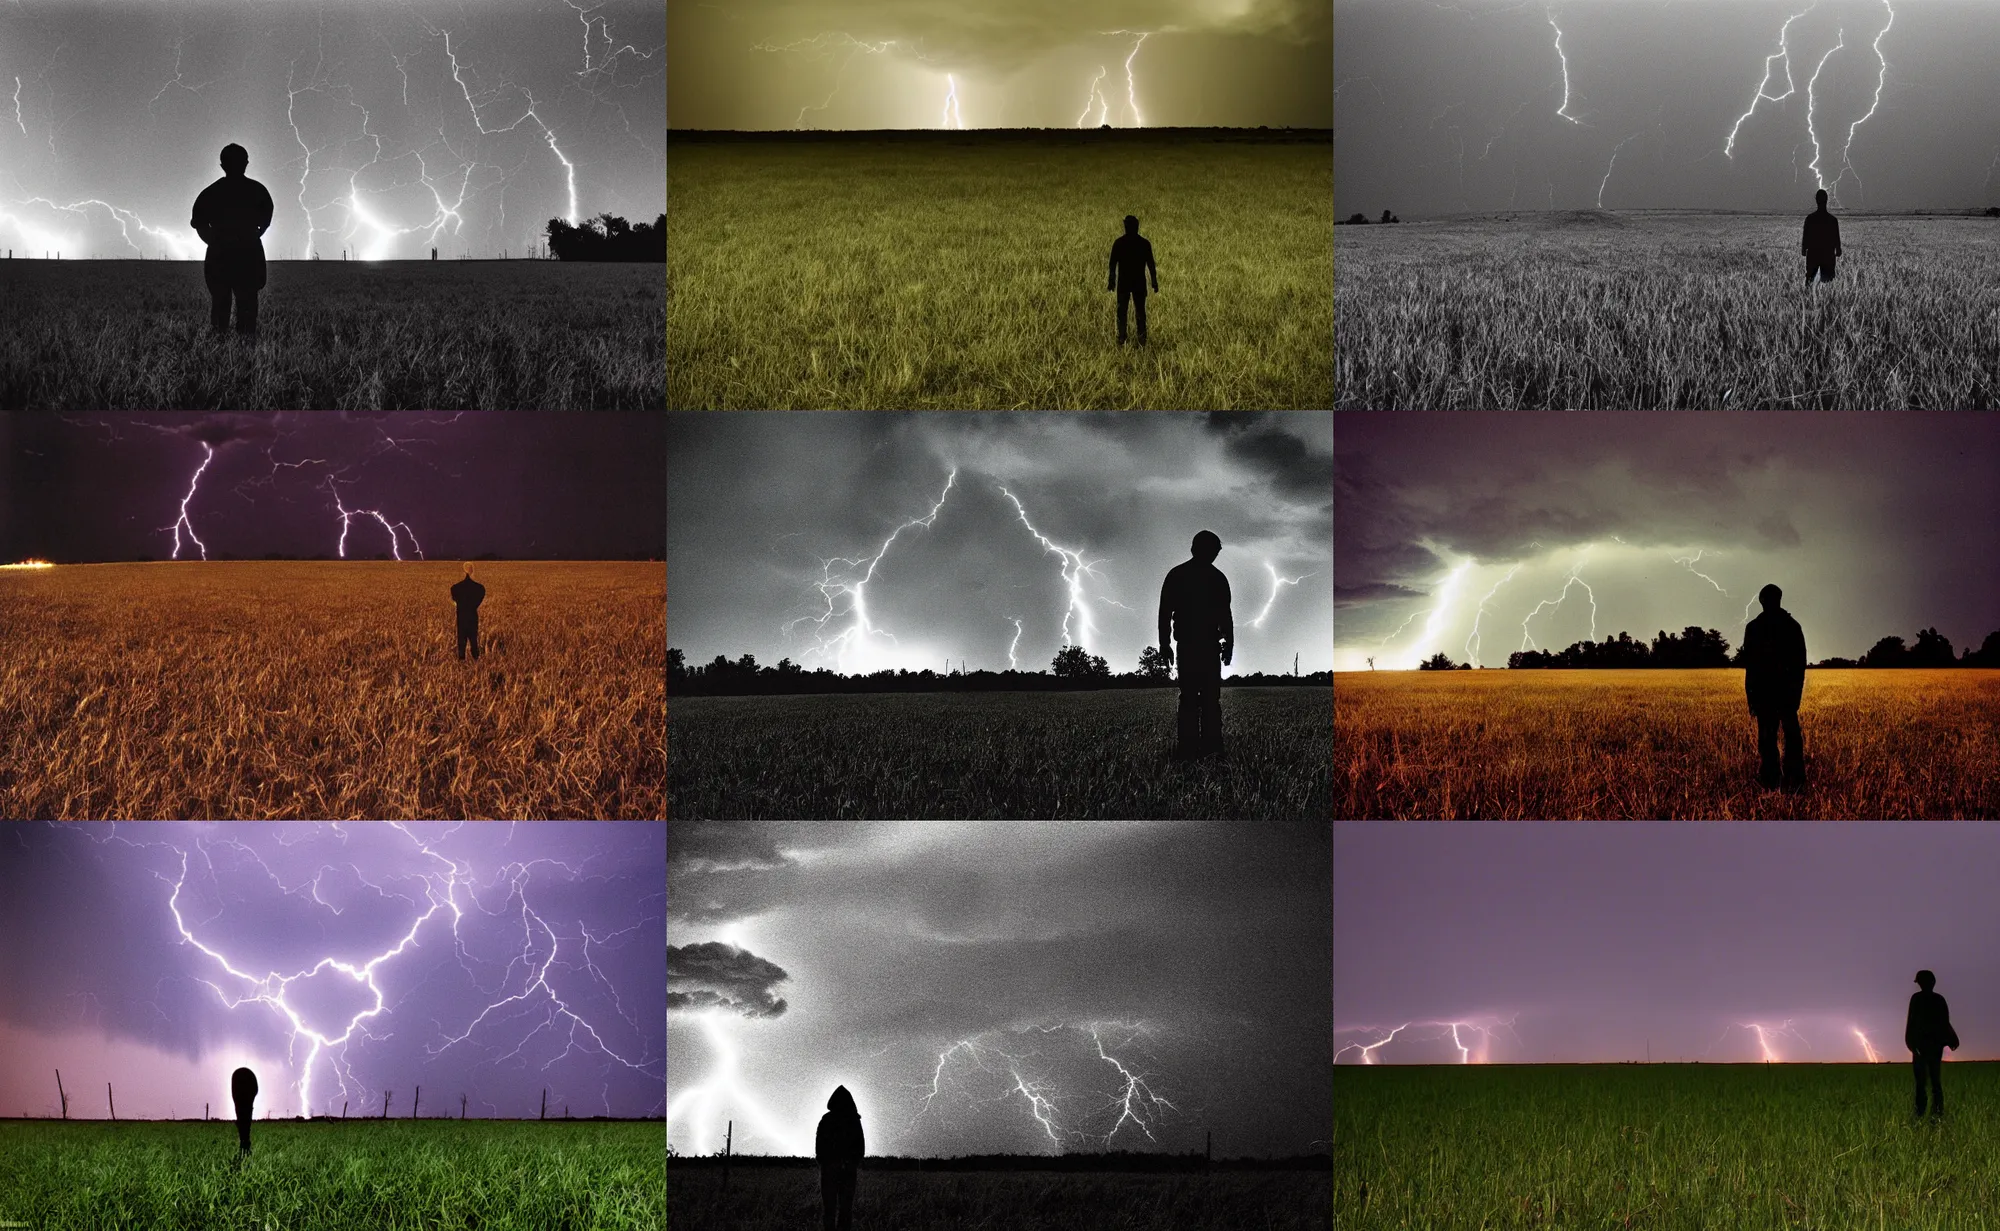 Prompt: weird dark silhouette standing in the field, night, tornado, lightning, phone flash, 1998 photo